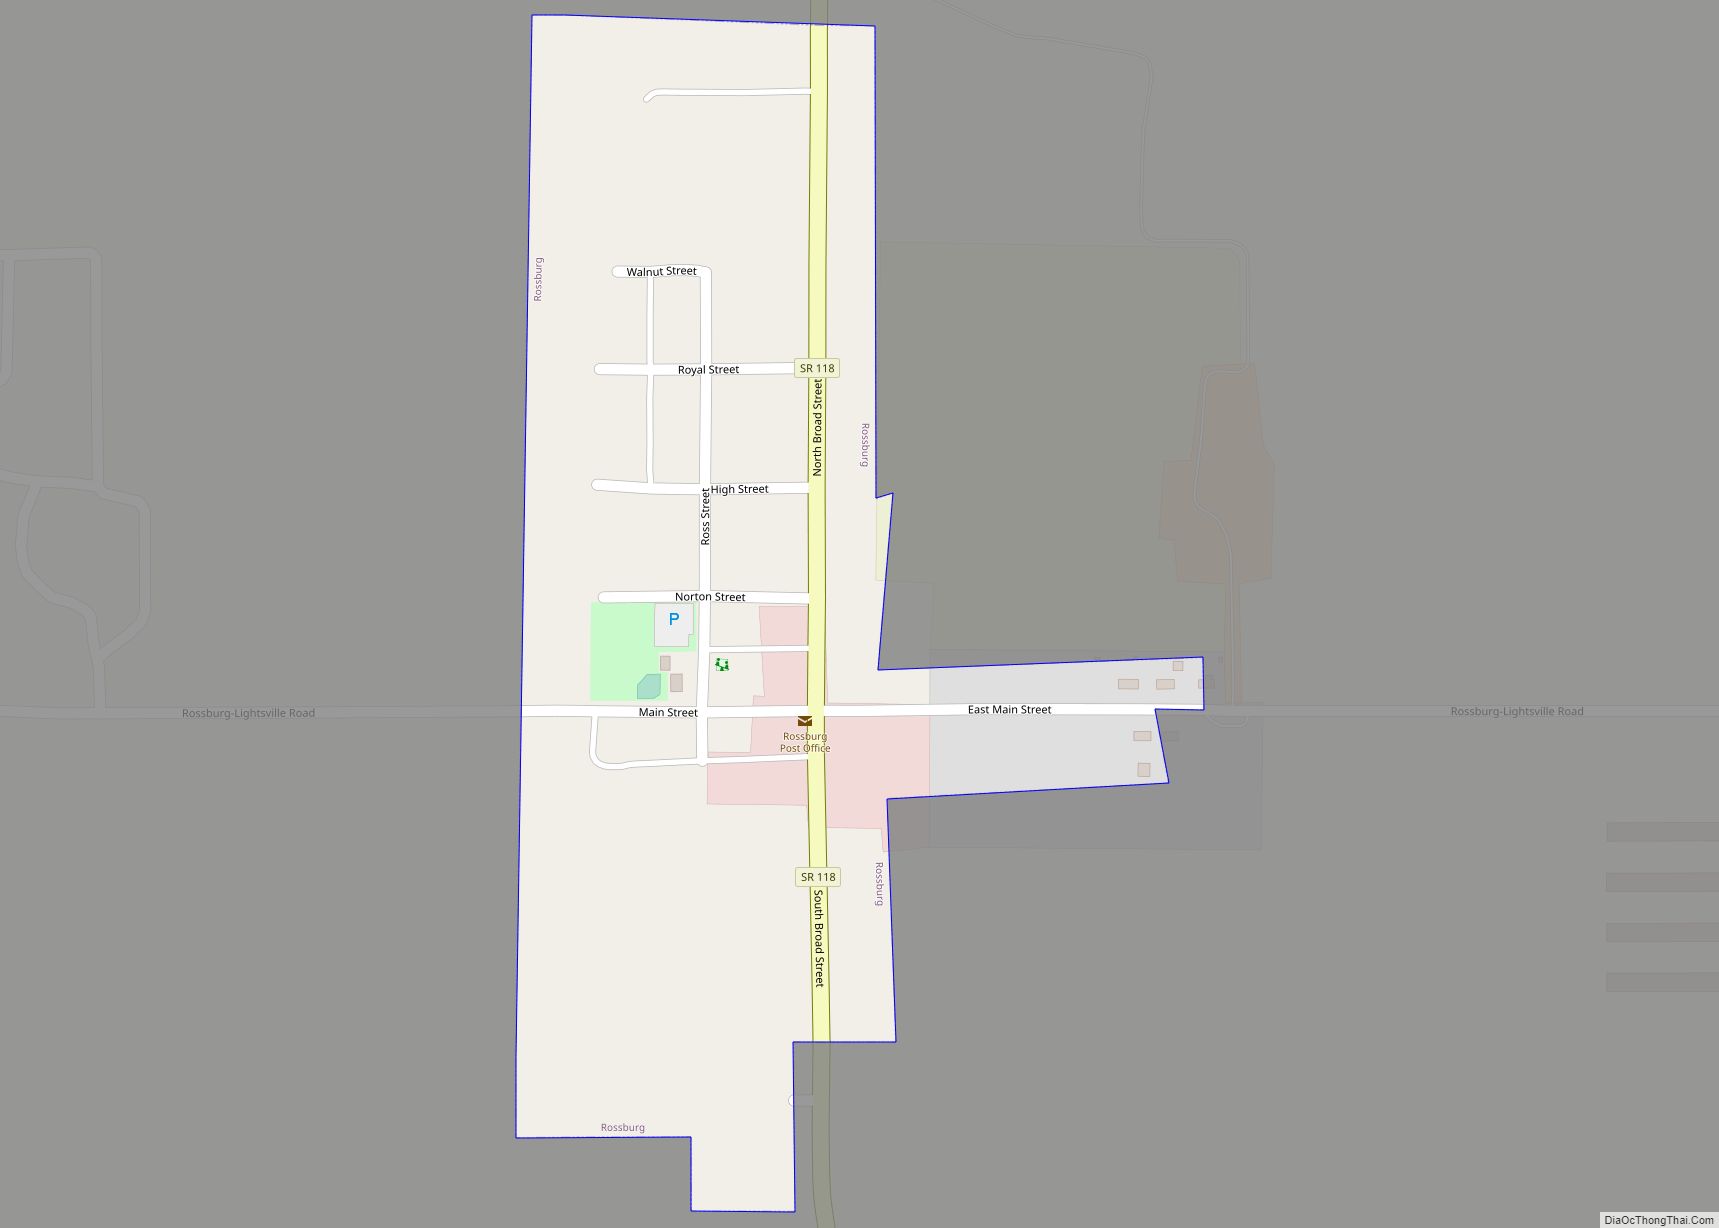 Map of Rossburg village